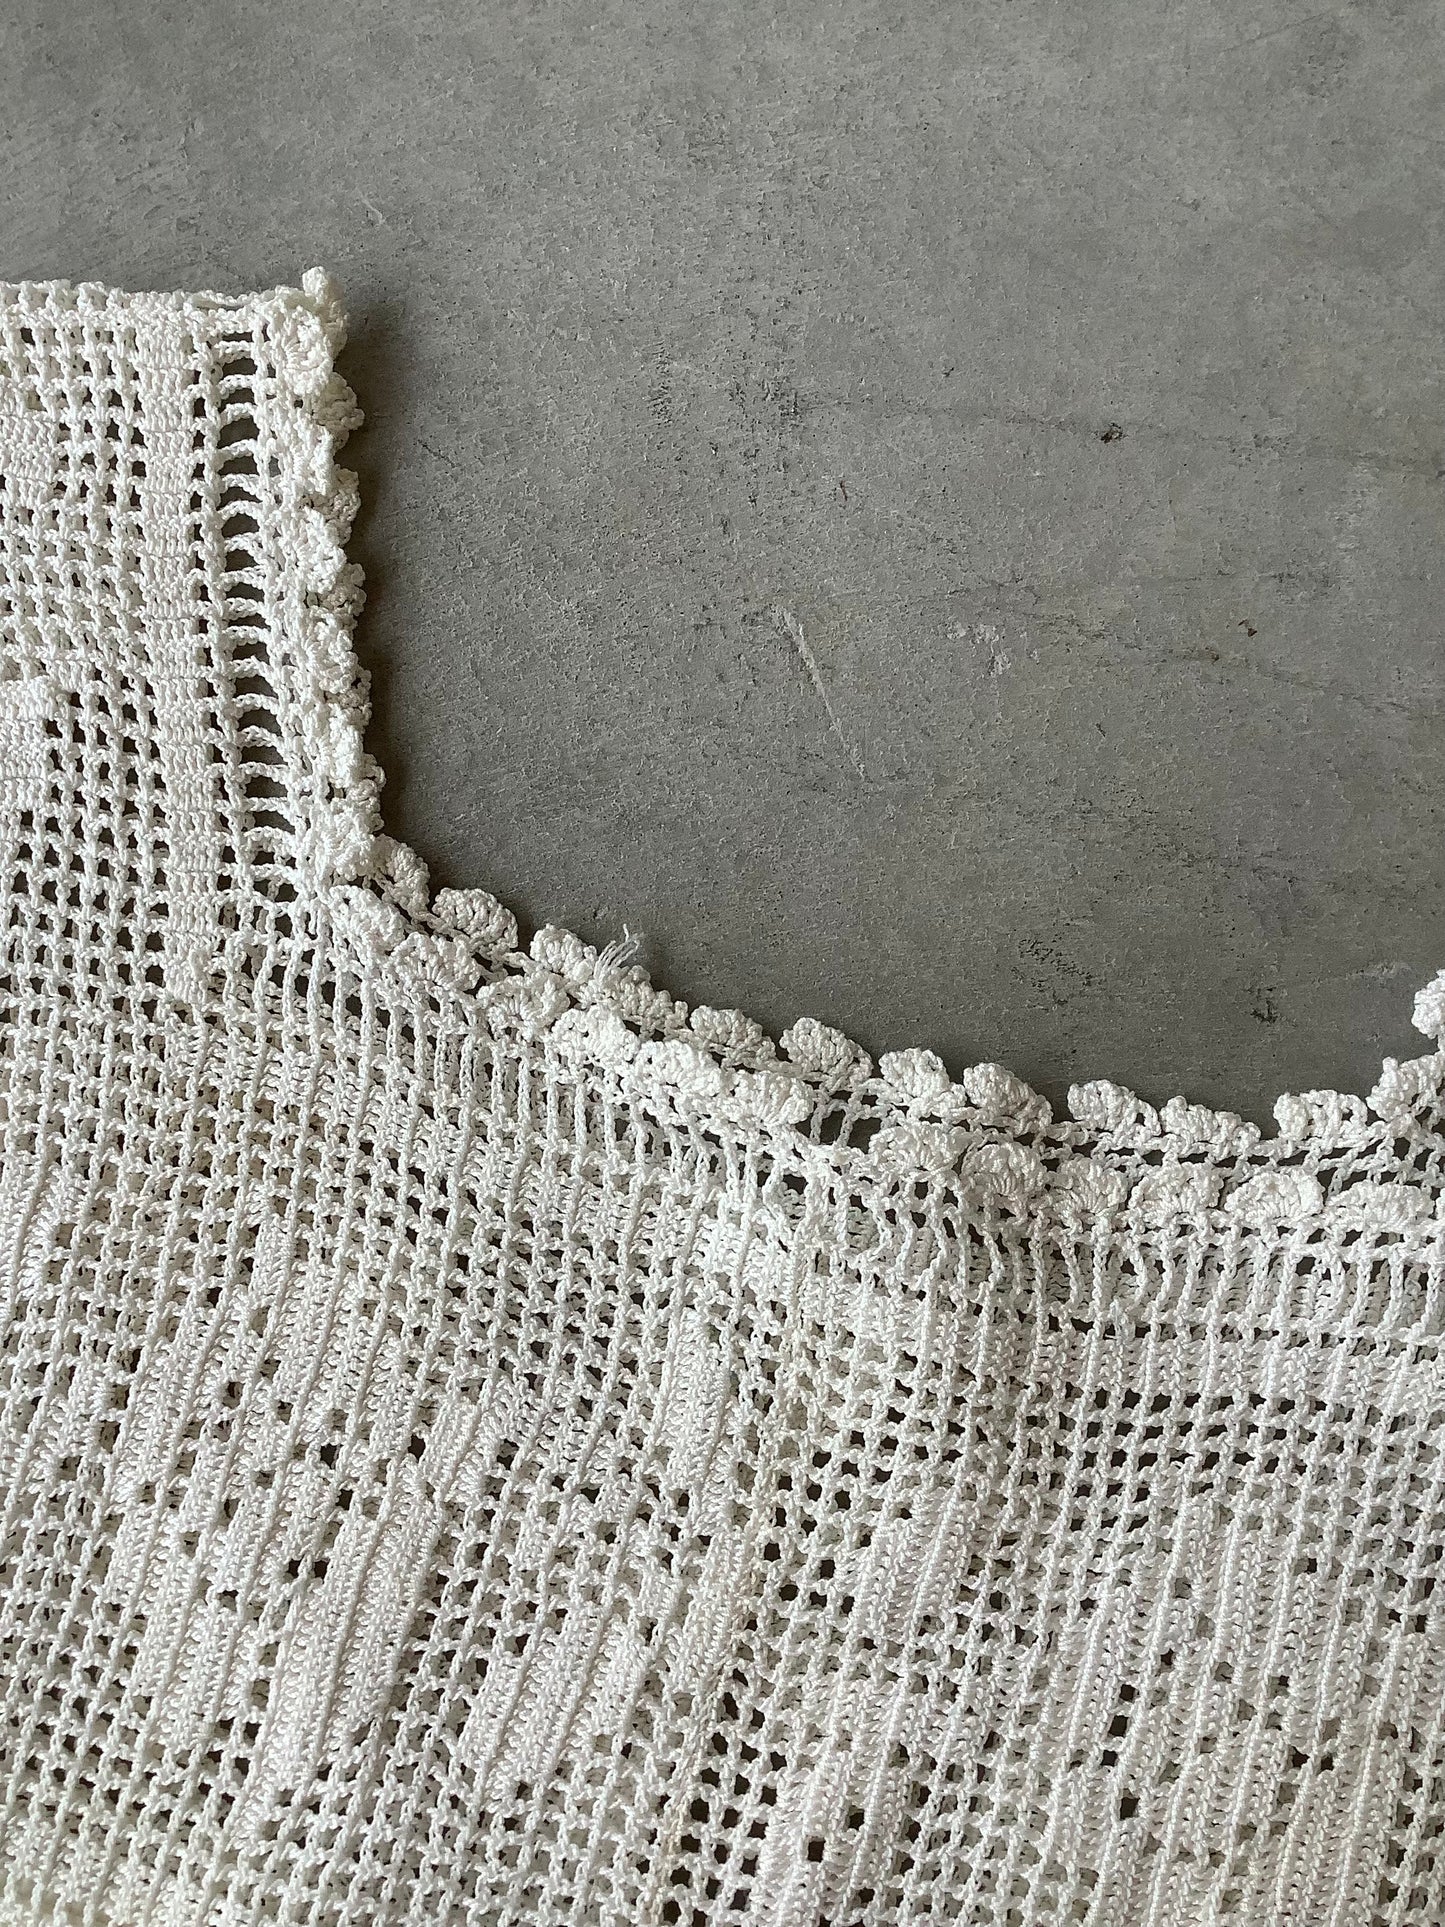 Antique cotton crochet nightgown